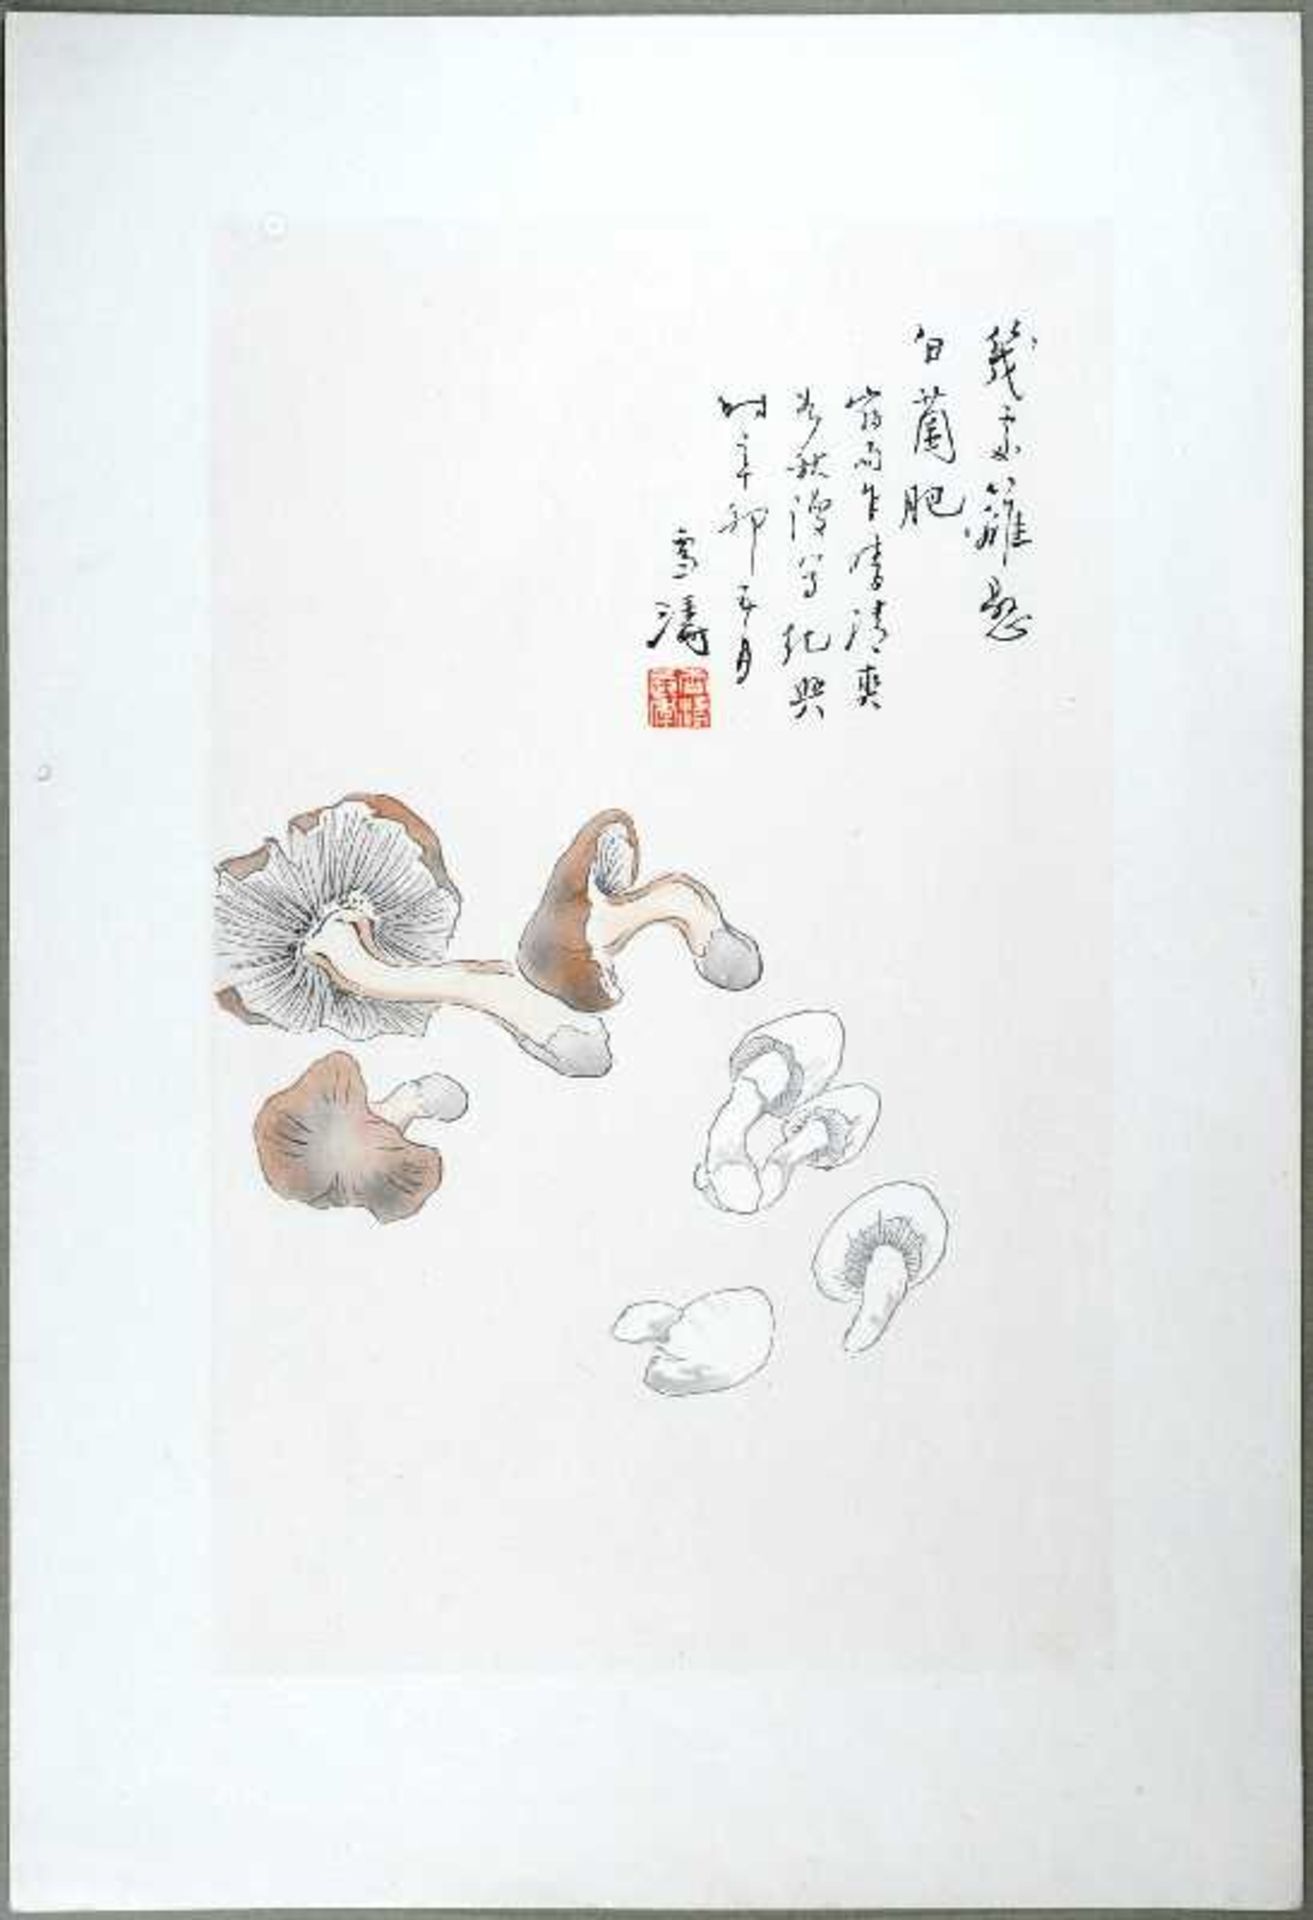 WANG XUETAO (1903-1982) Aquarellfarben-Holzschnitt. China, Darstellung von Pilzen mit einem